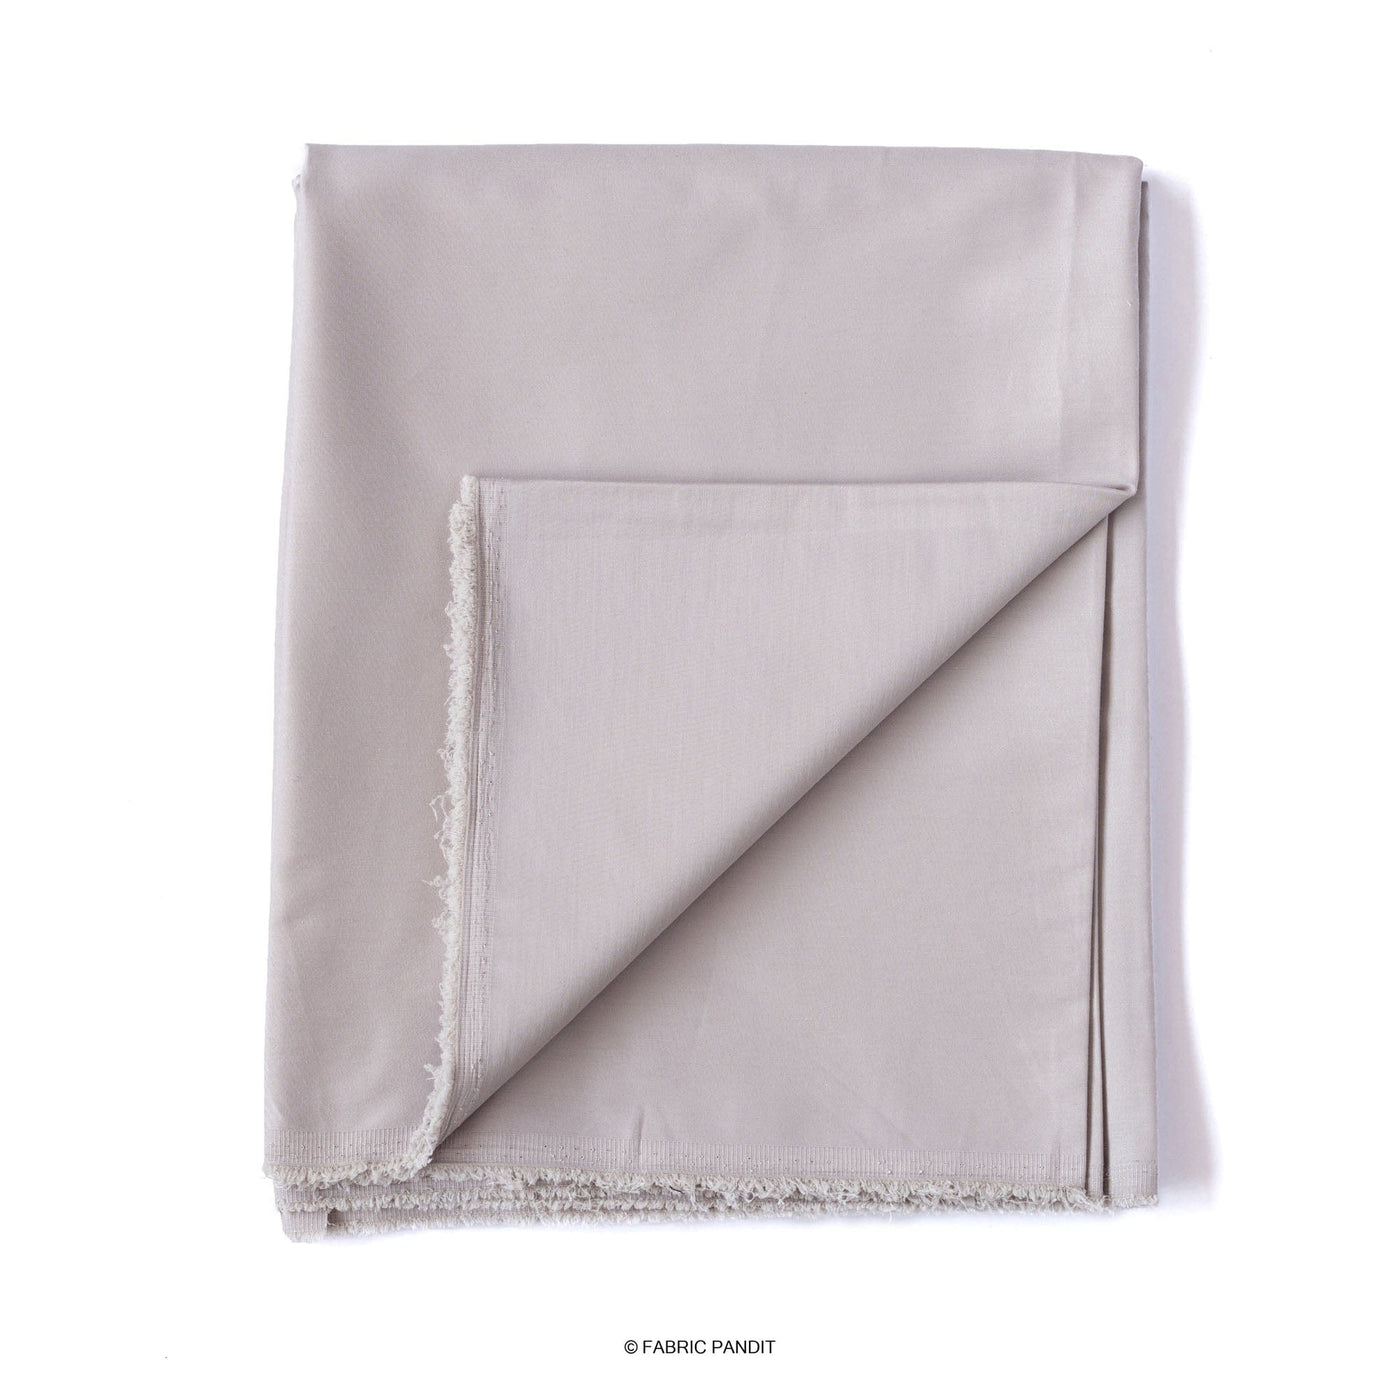 Fabric Pandit Cut Piece (CUT PIECE) Harbor Grey Pure Cotton Lycra Stretch Men's Shirt Fabric (Width 54 inch)